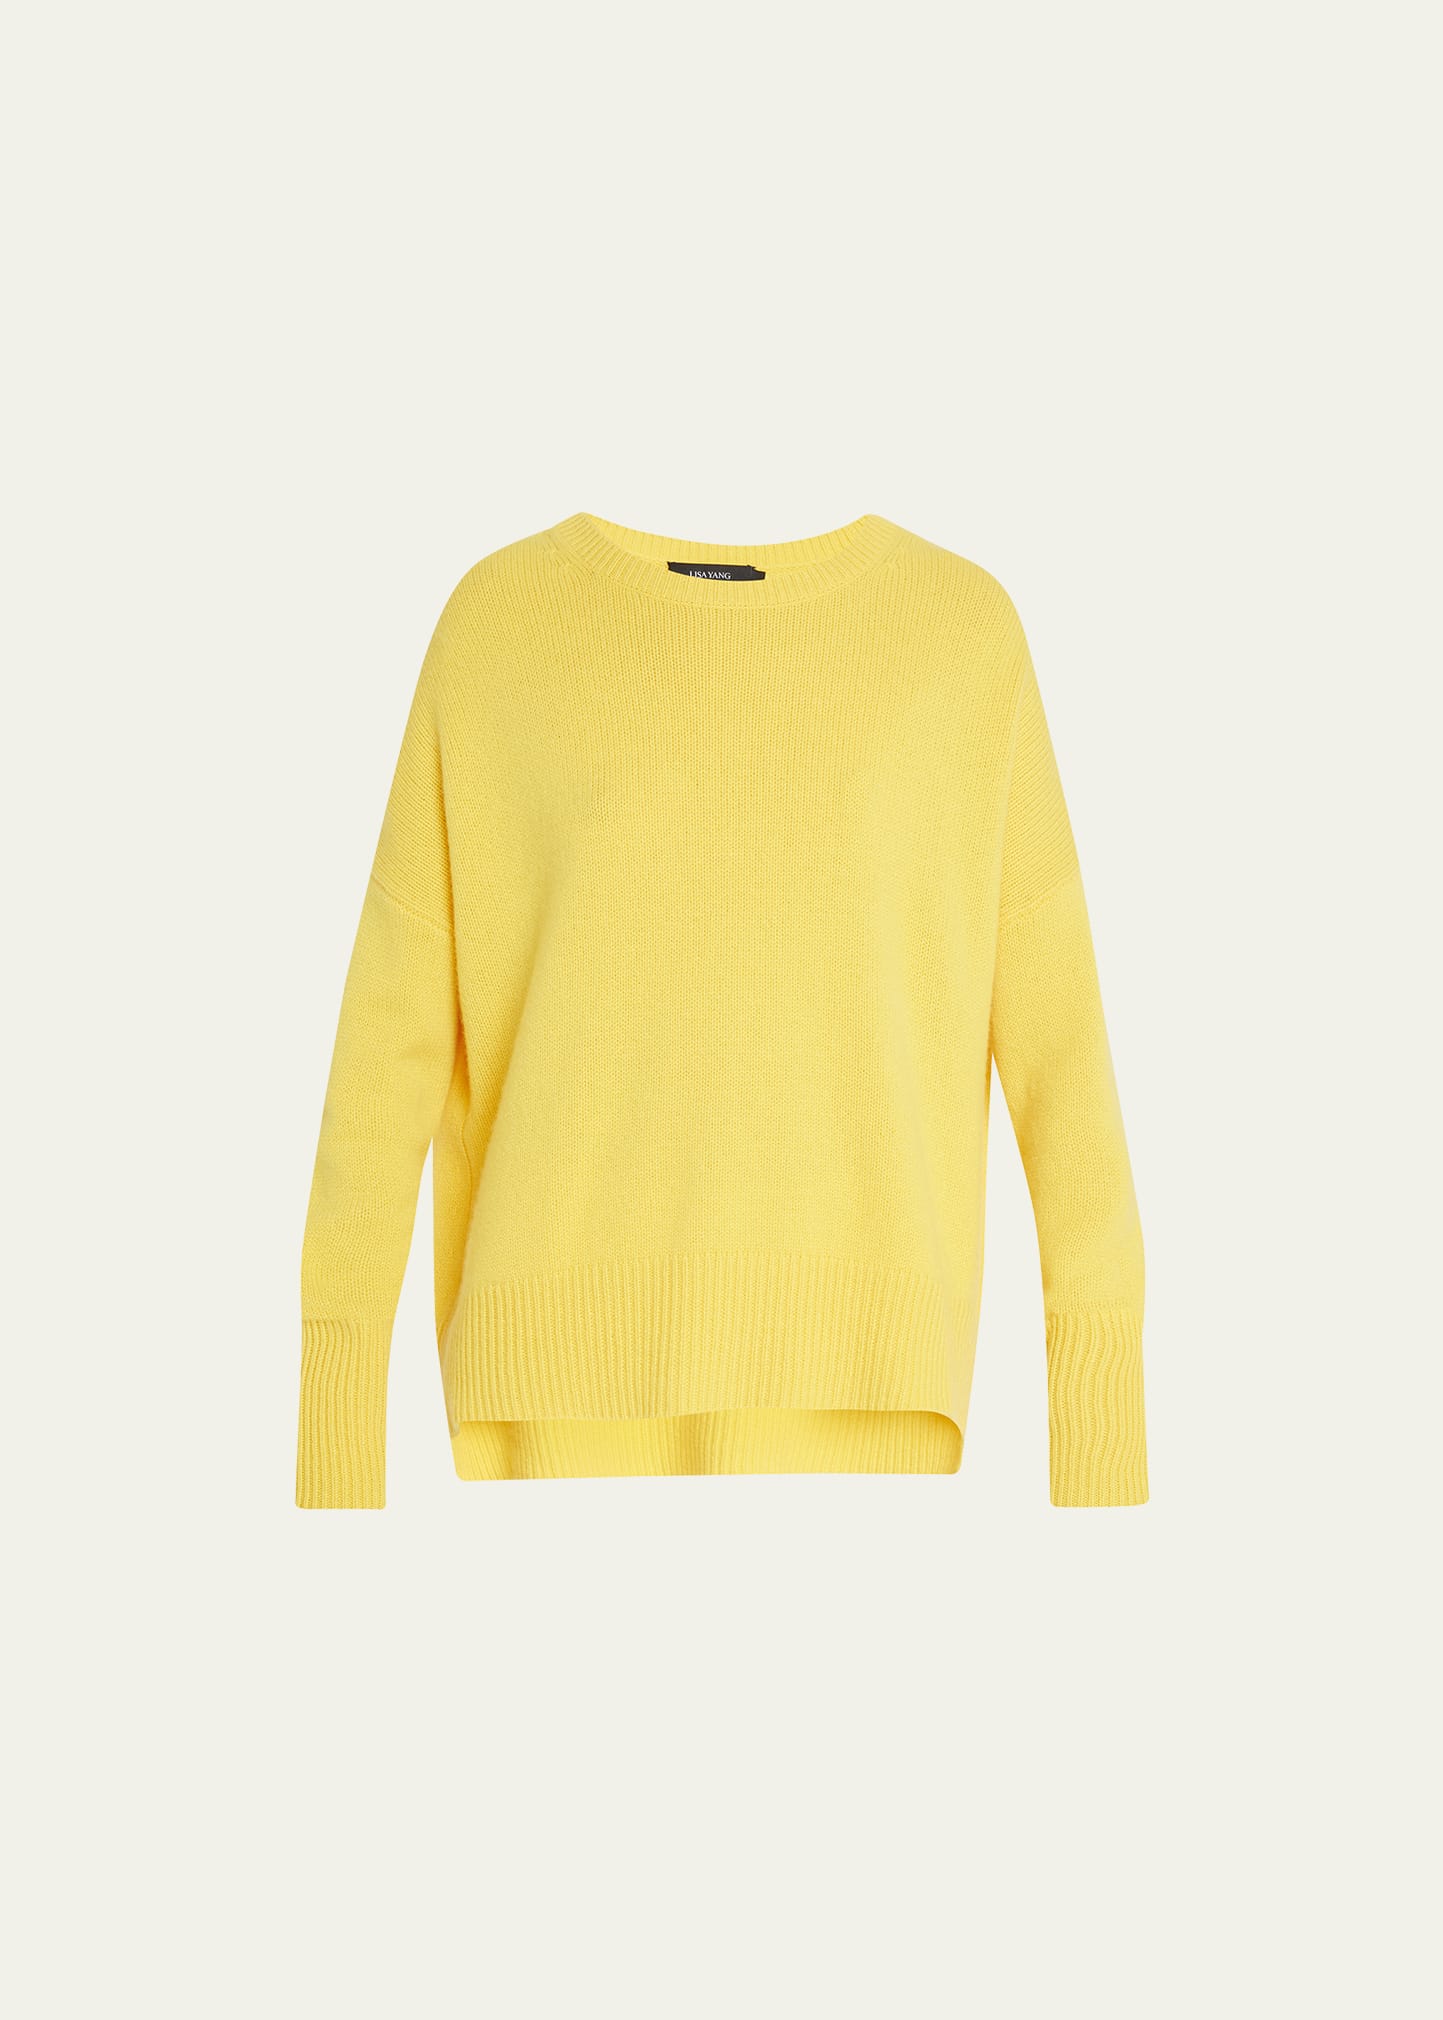 Lisa Yang The Mila Cashmere Drop-Shoulder Crewneck Sweater